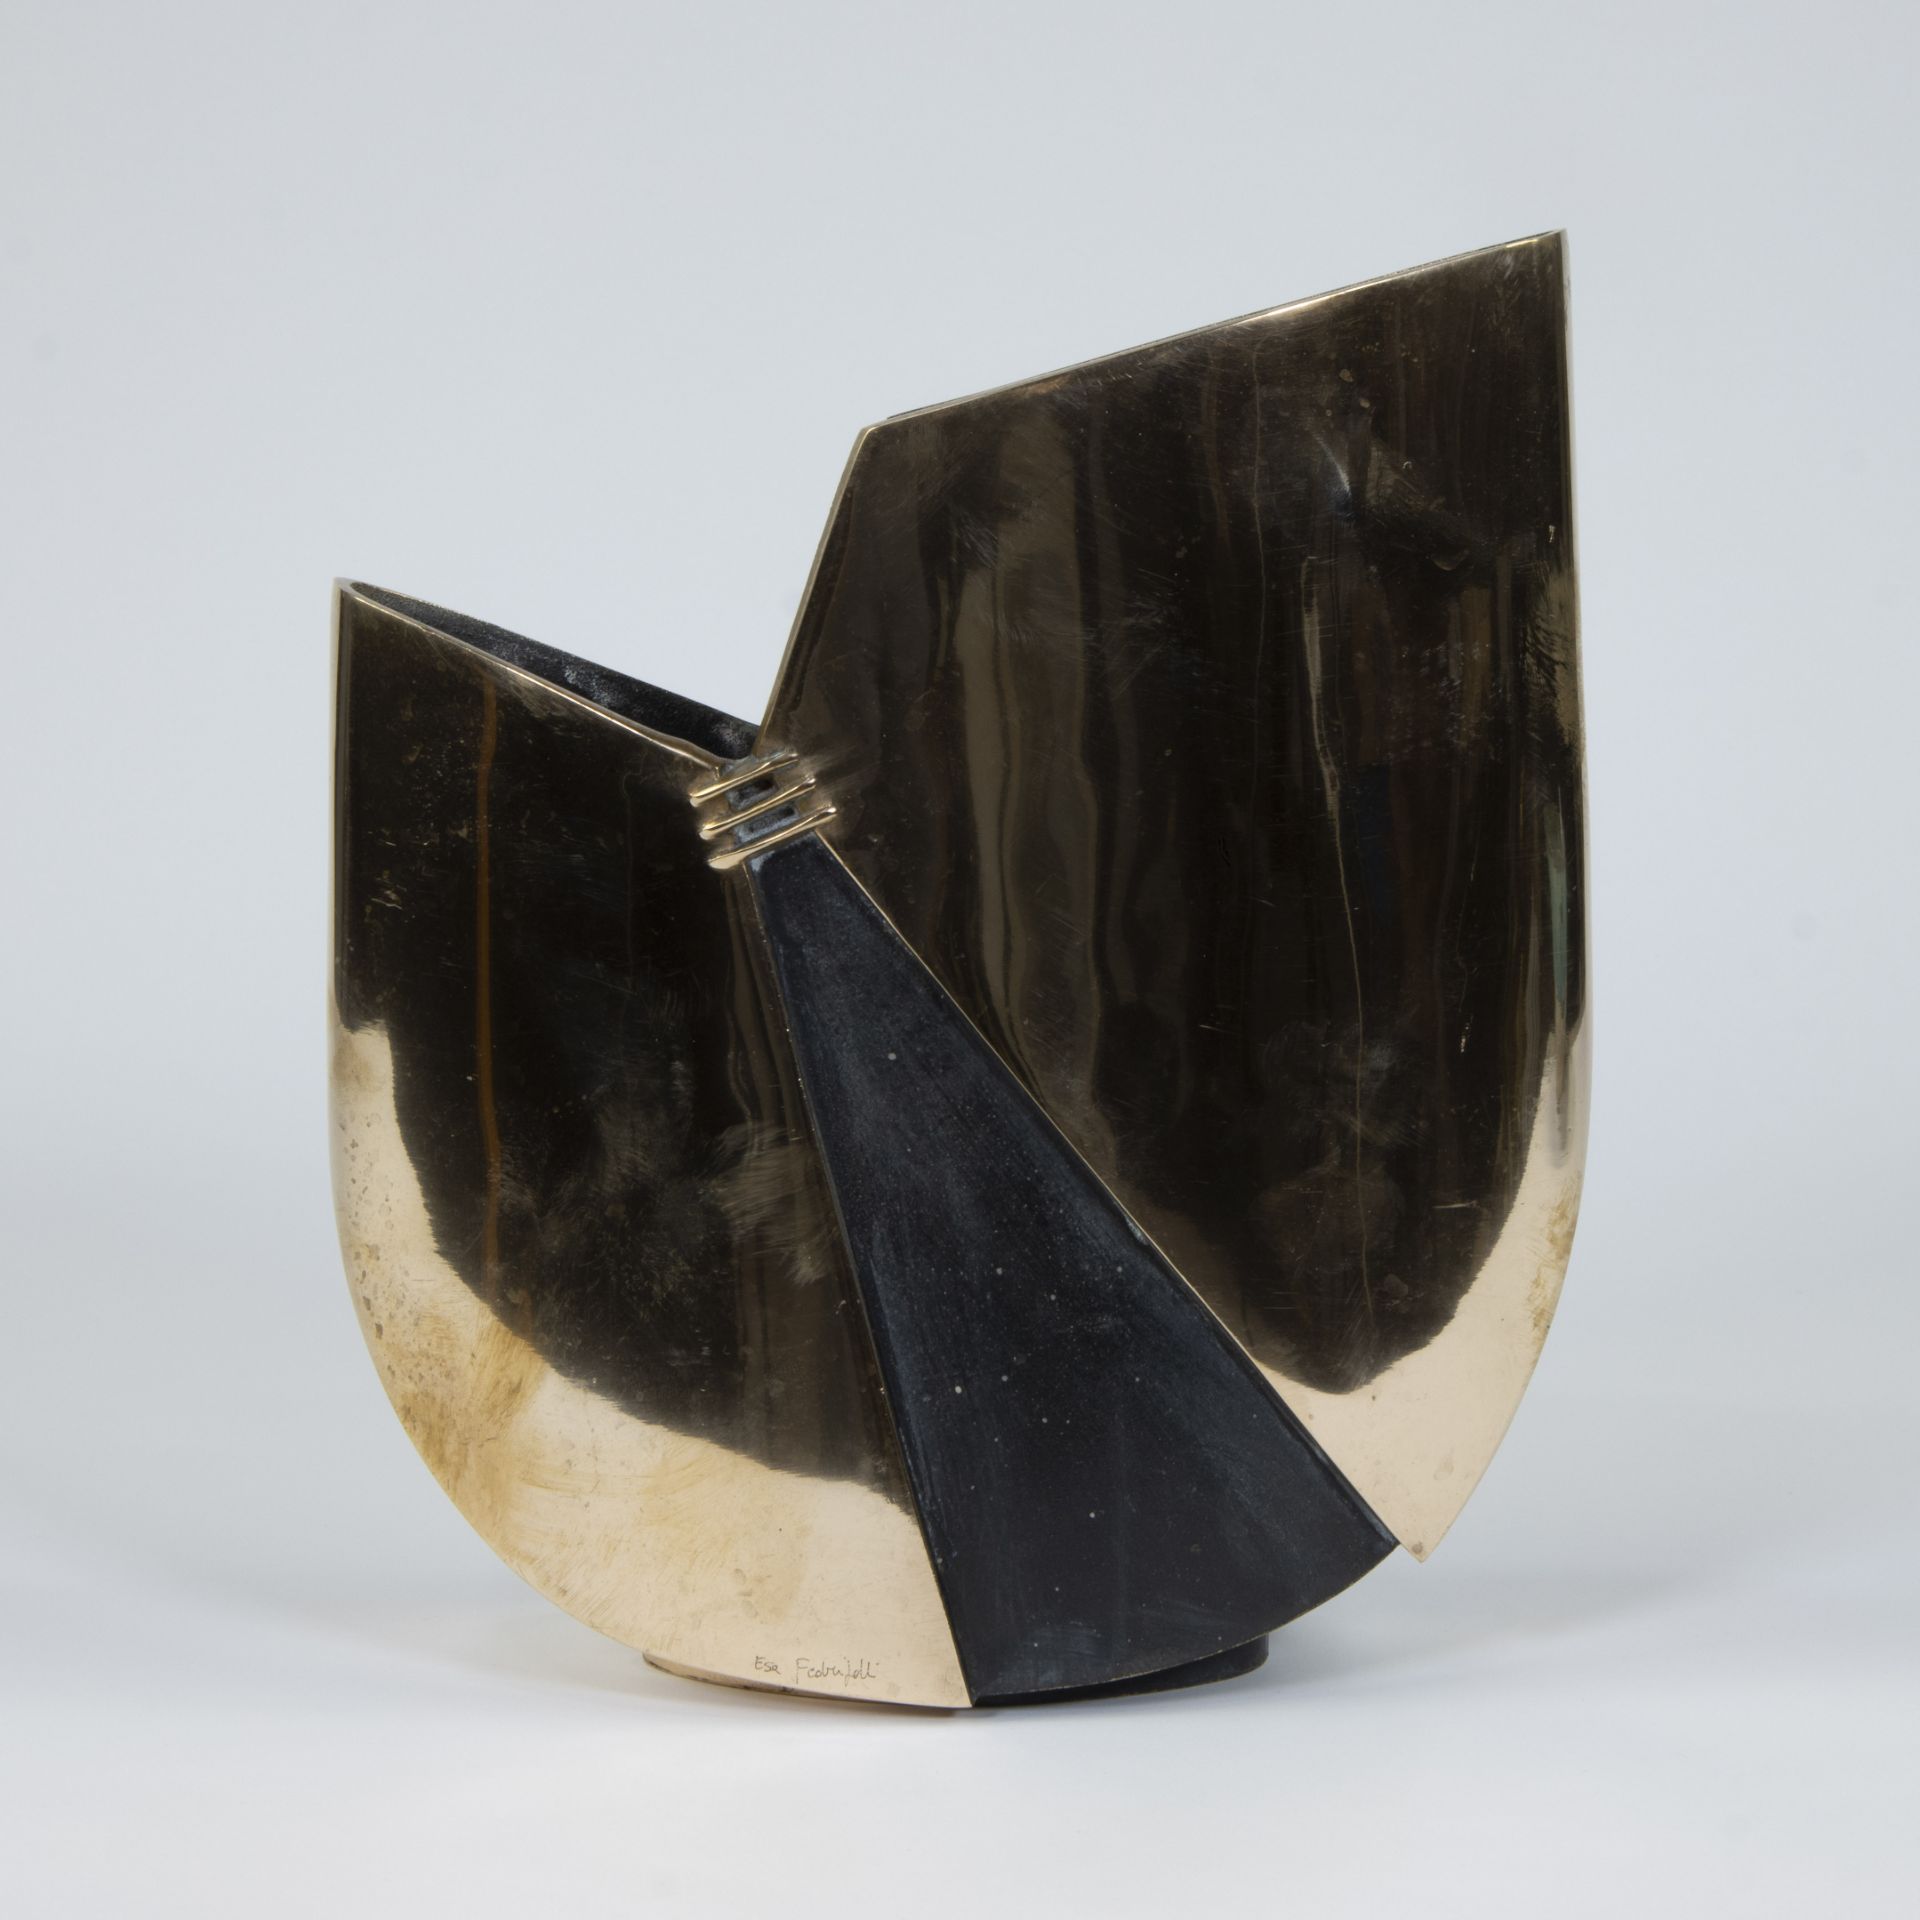 Esa FEDRIGOLLI (1950), polished bronze vase, 1970, Esart foundry